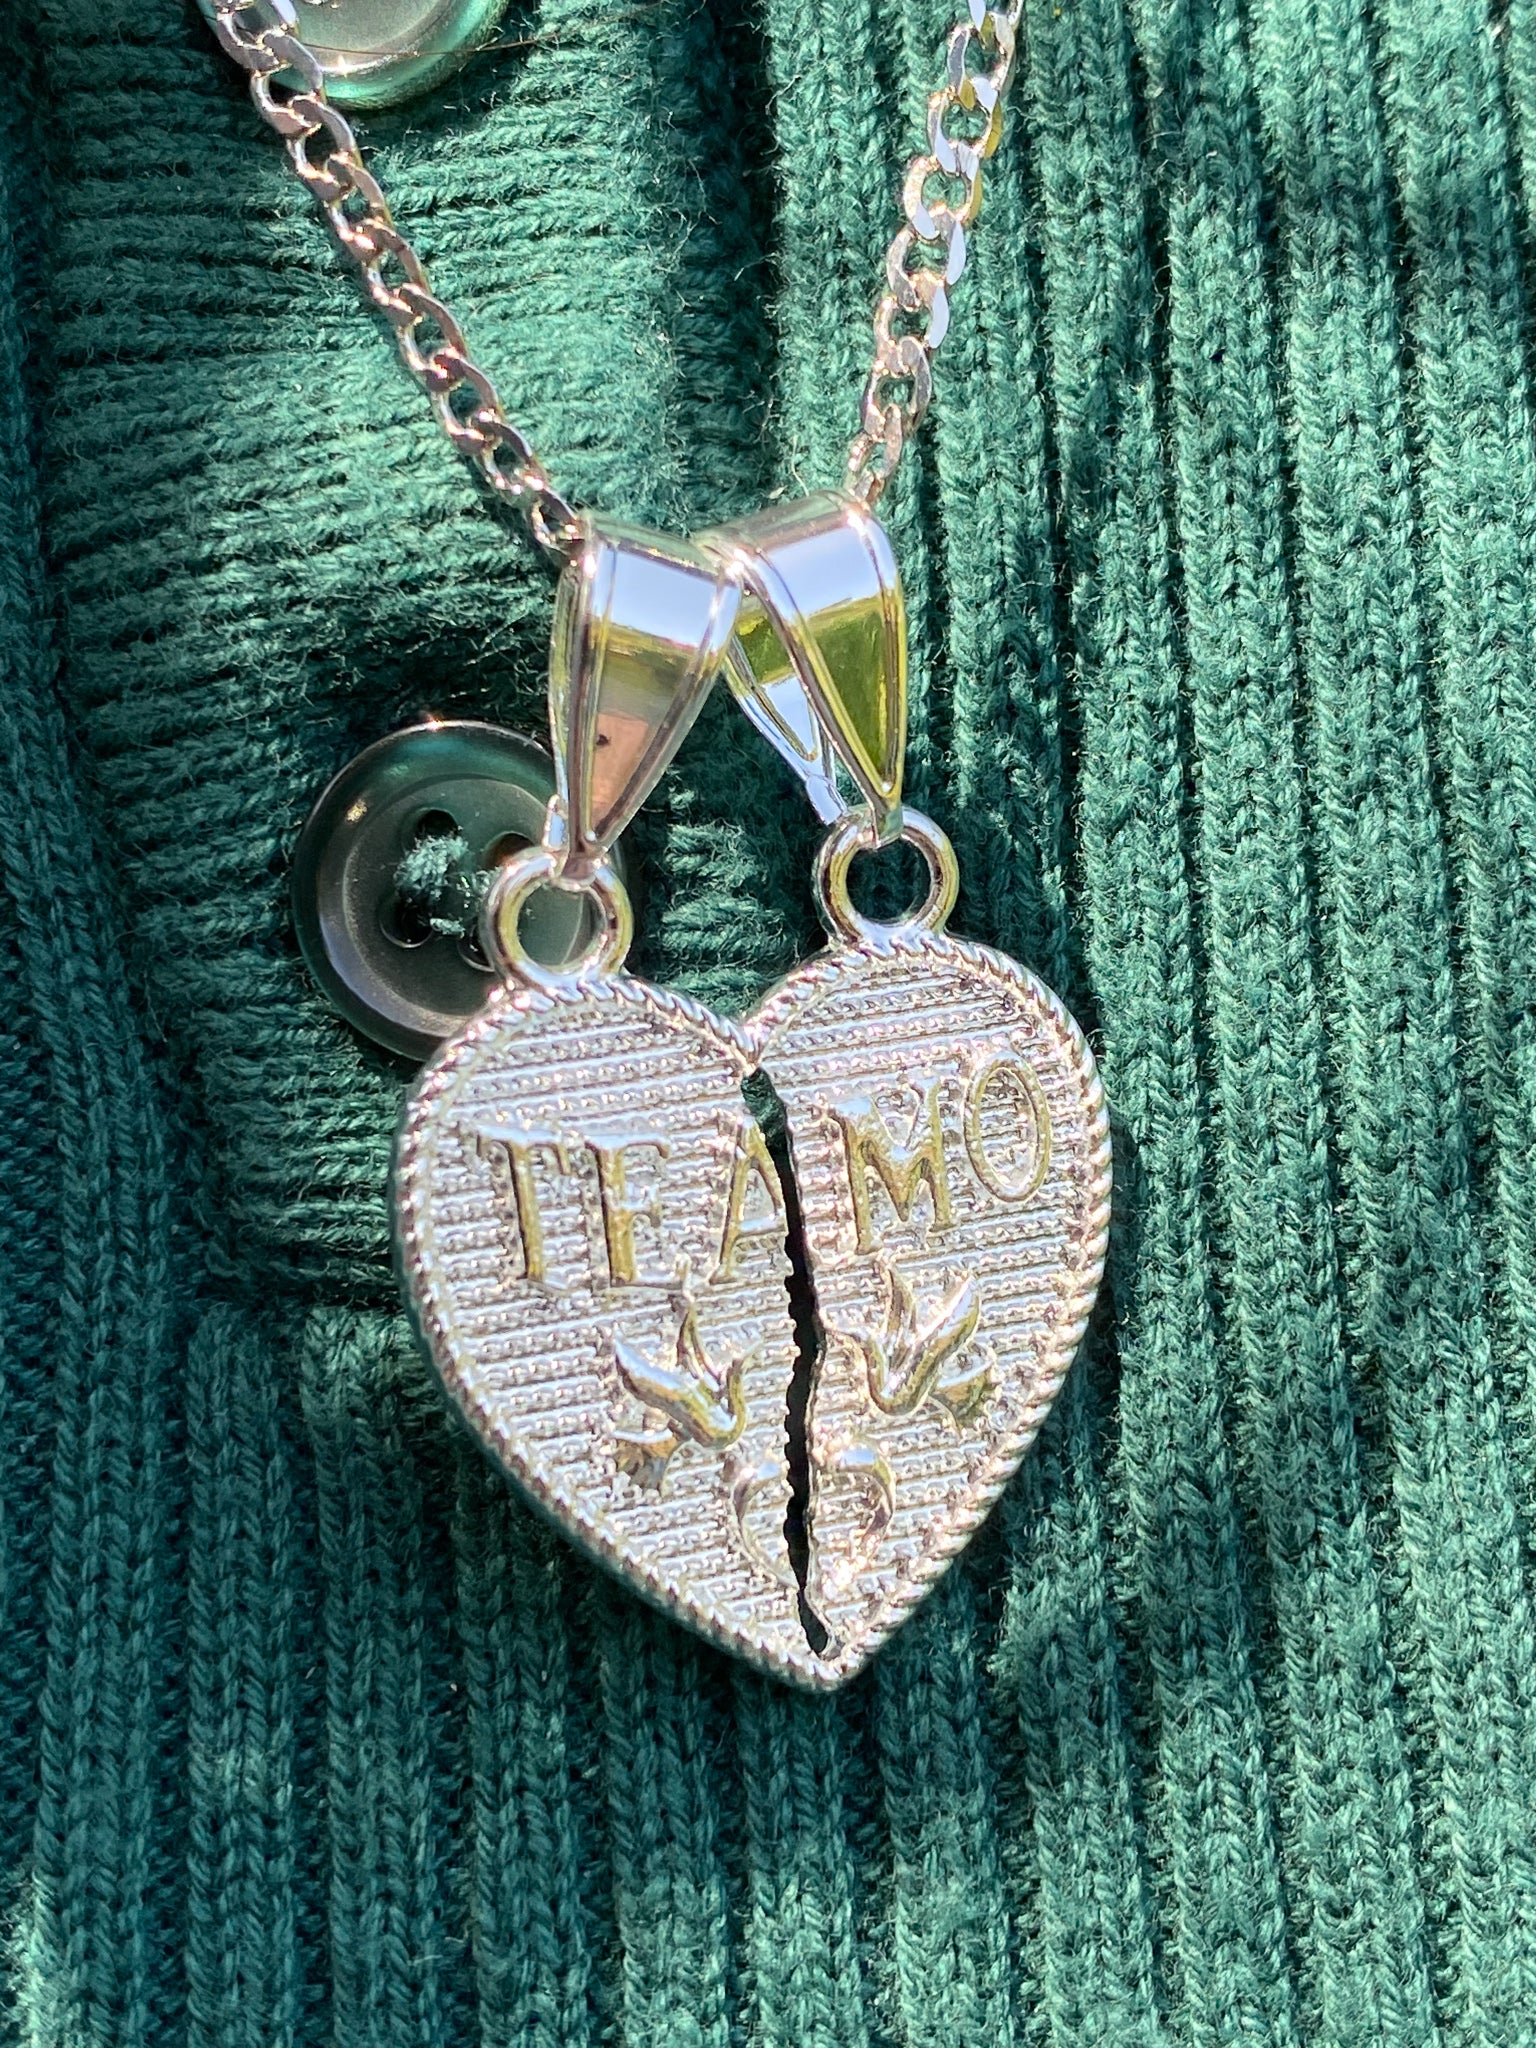 Breakable Heart Necklaces – La Rosa Brand